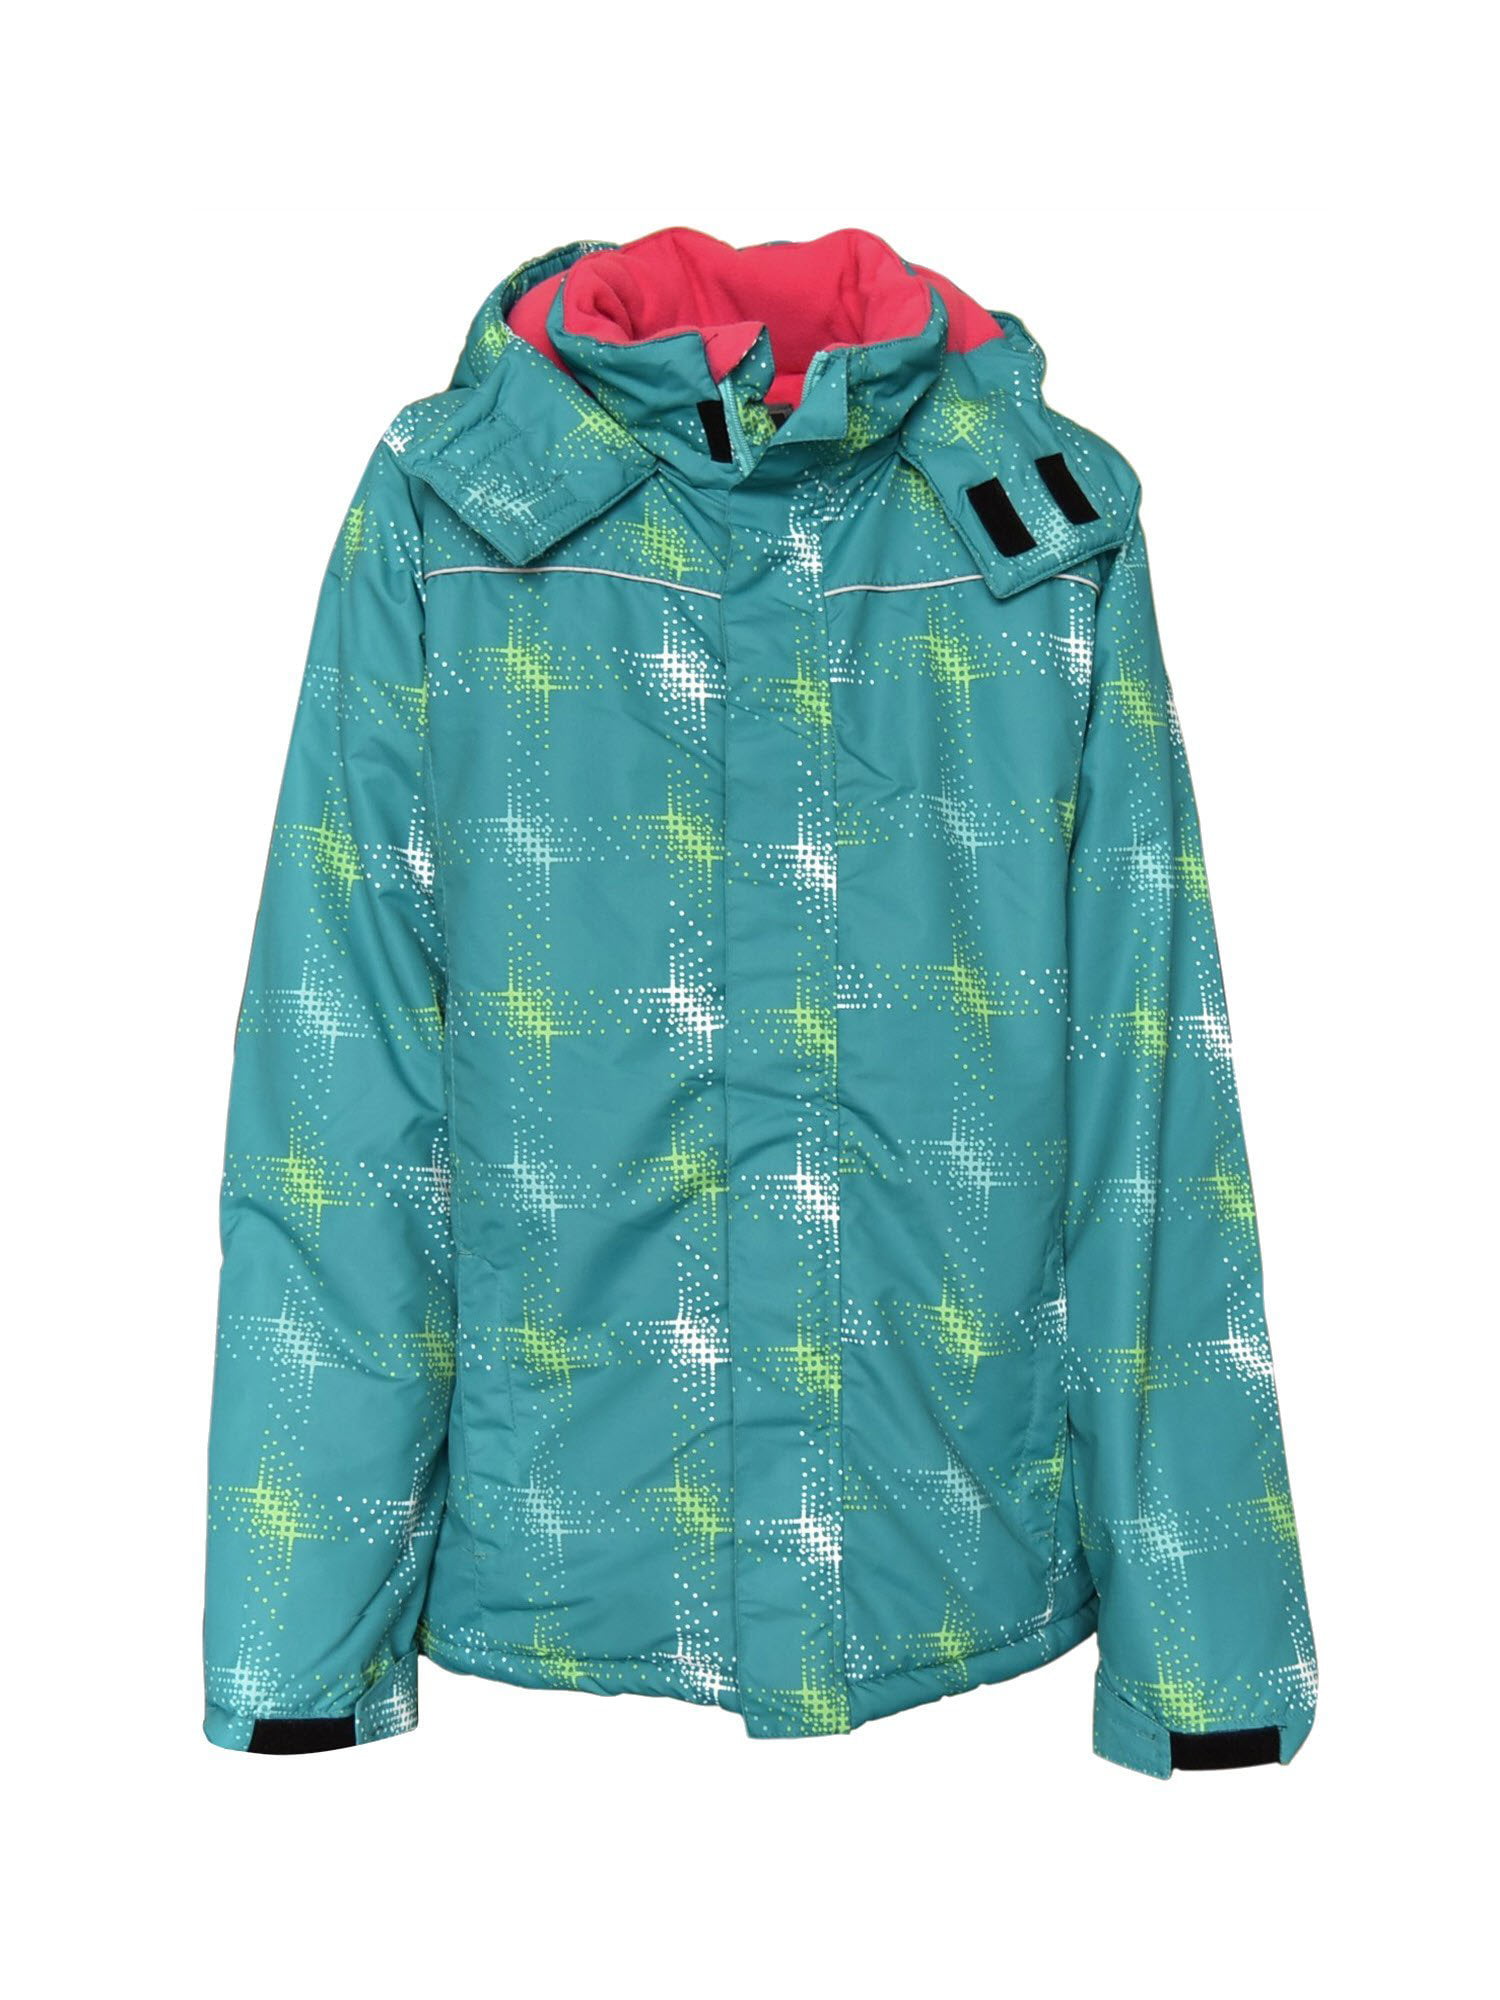 Pulse Girls Big Youth Stars Ski Jacket Coat Insulated M - XL - Walmart.com